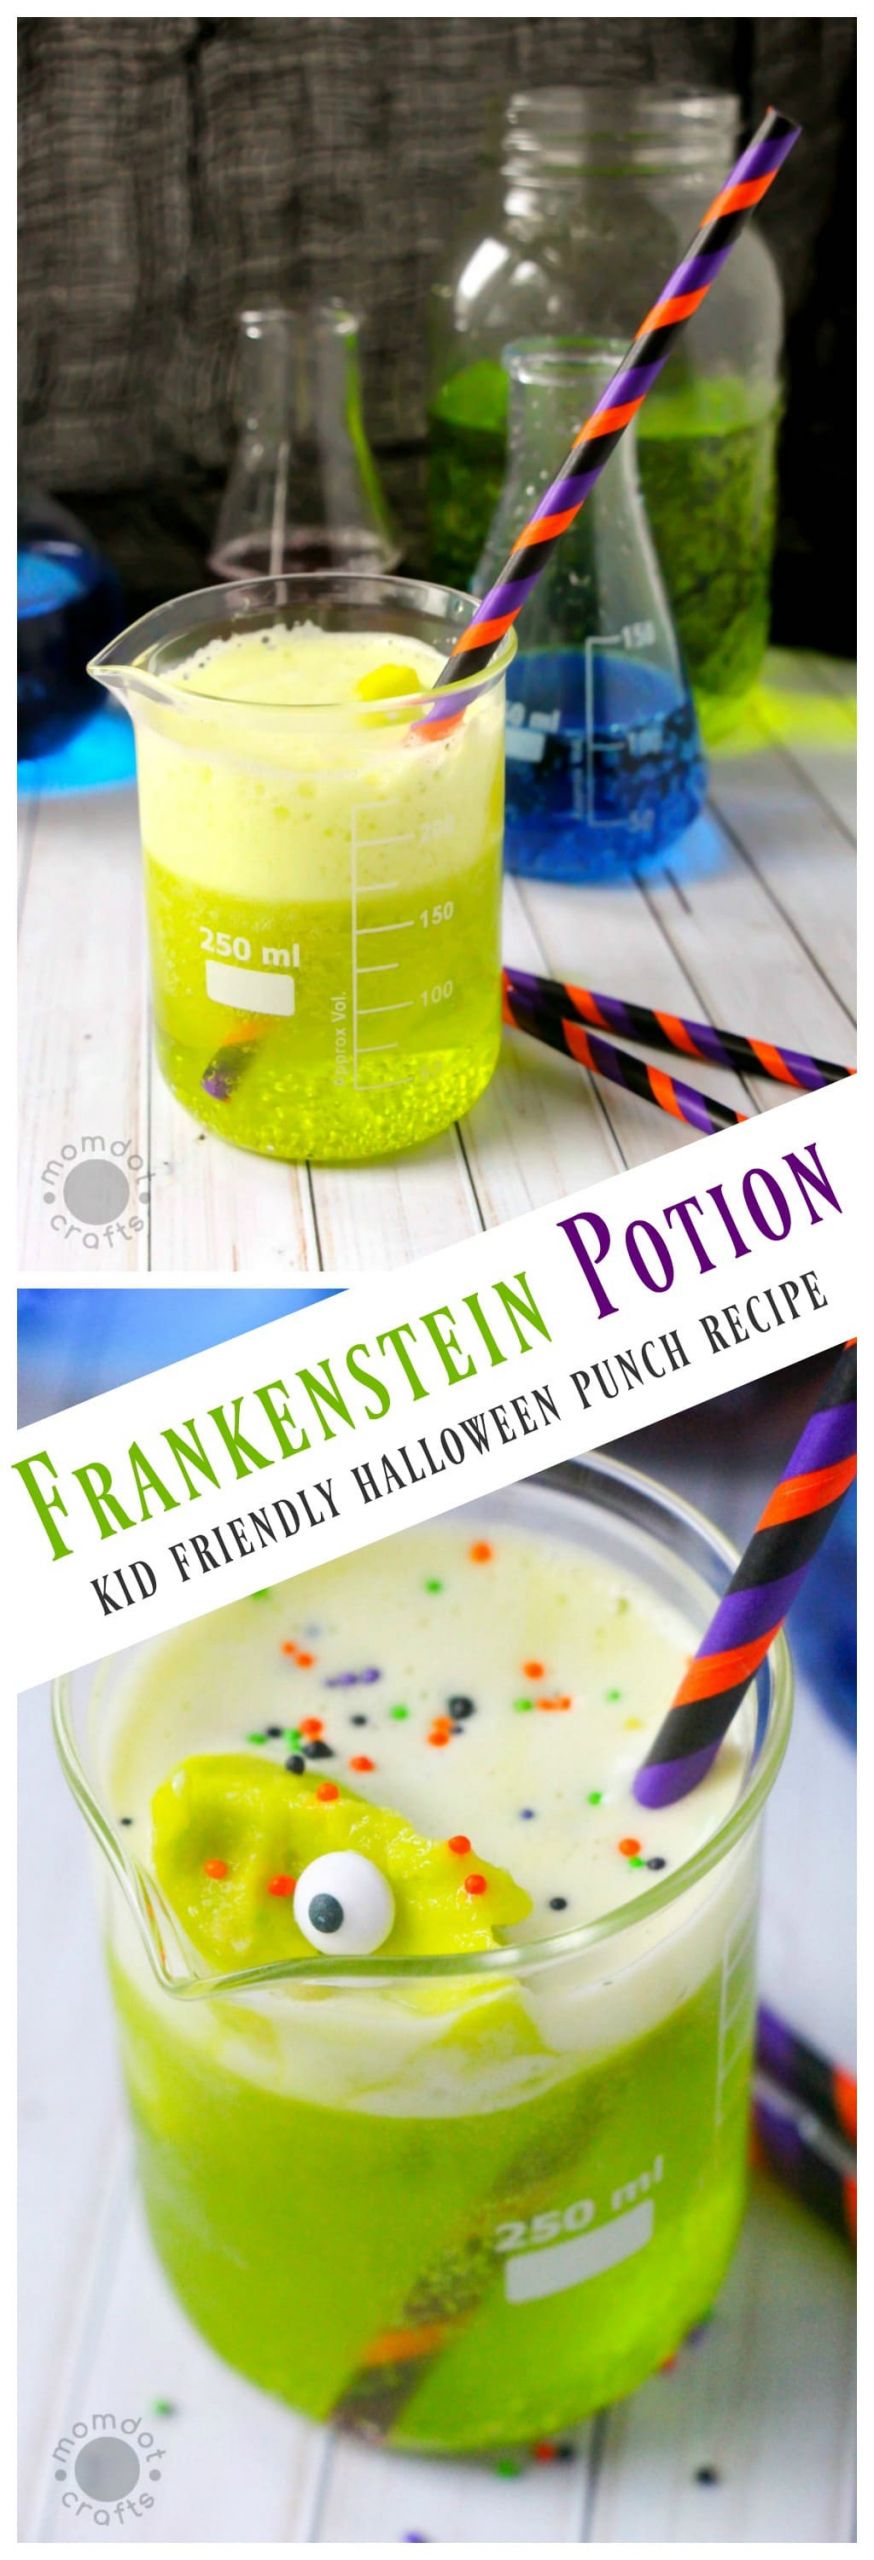 Kid Friendly Punch Bowl Recipes
 Frankenstein Punch Halloween Punch for Kids